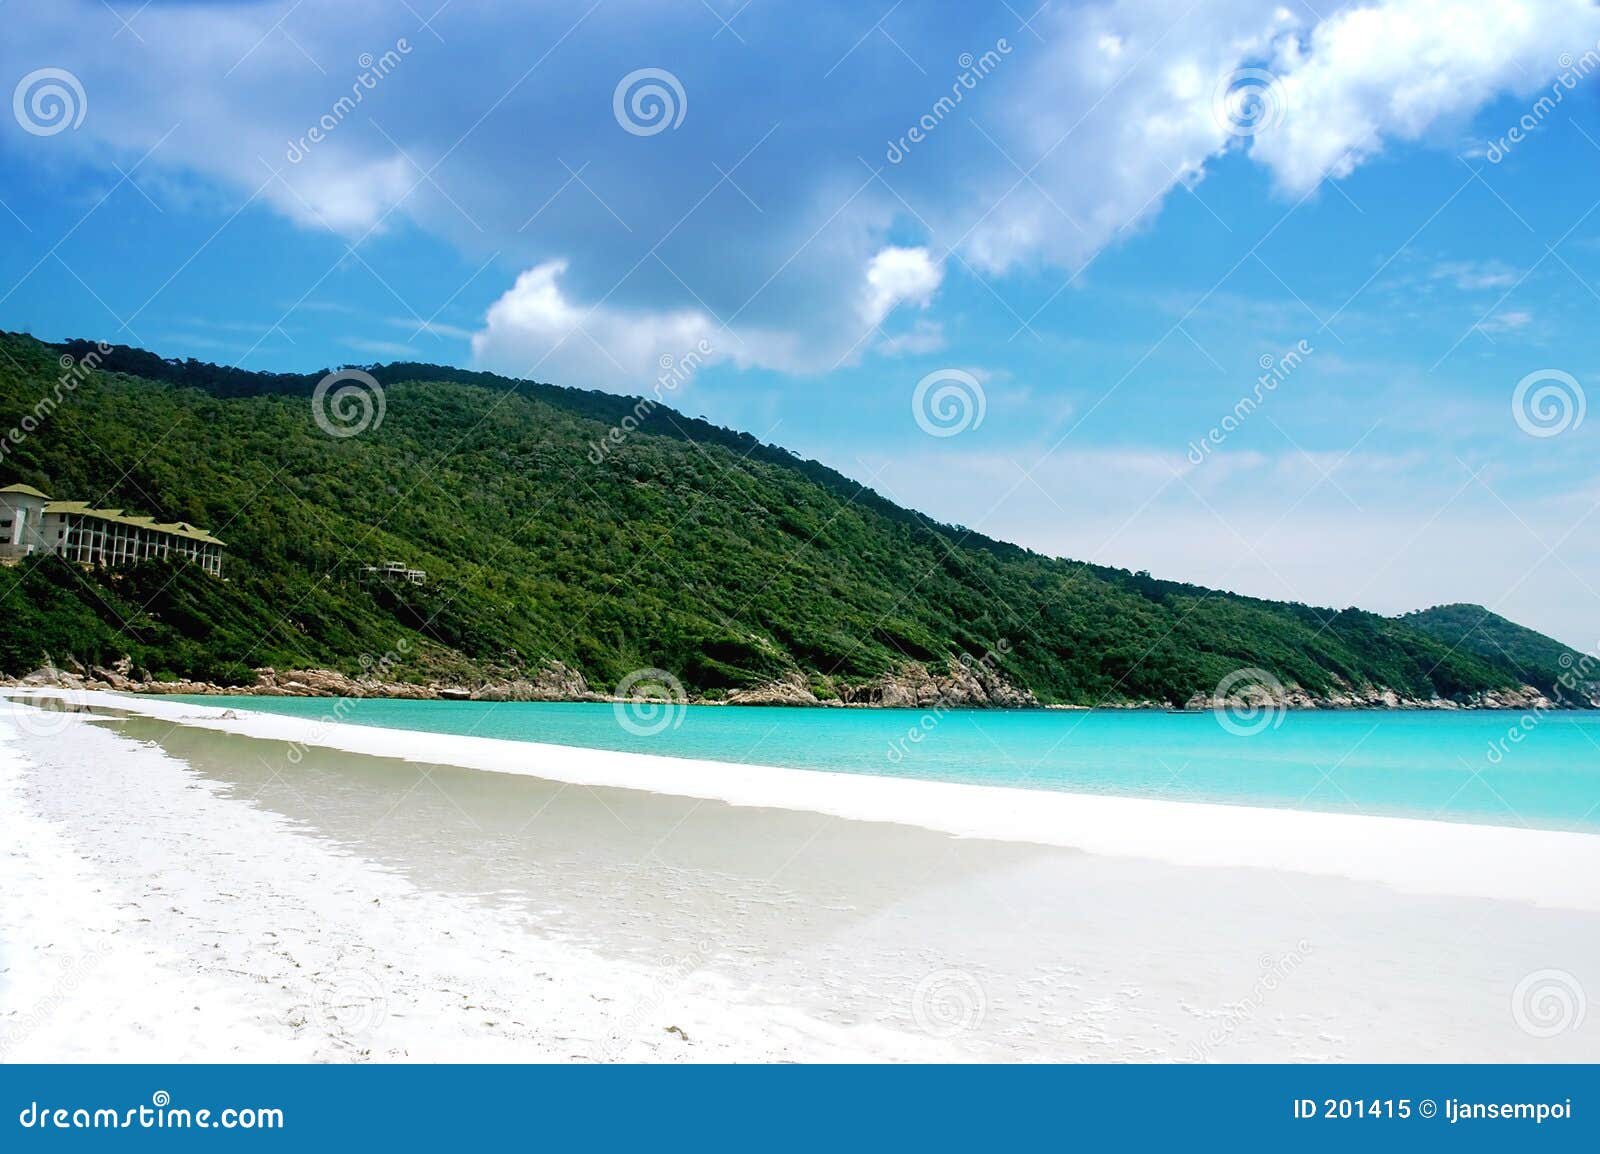 Royalty Free Stock Photo: Beautiful beach scenery